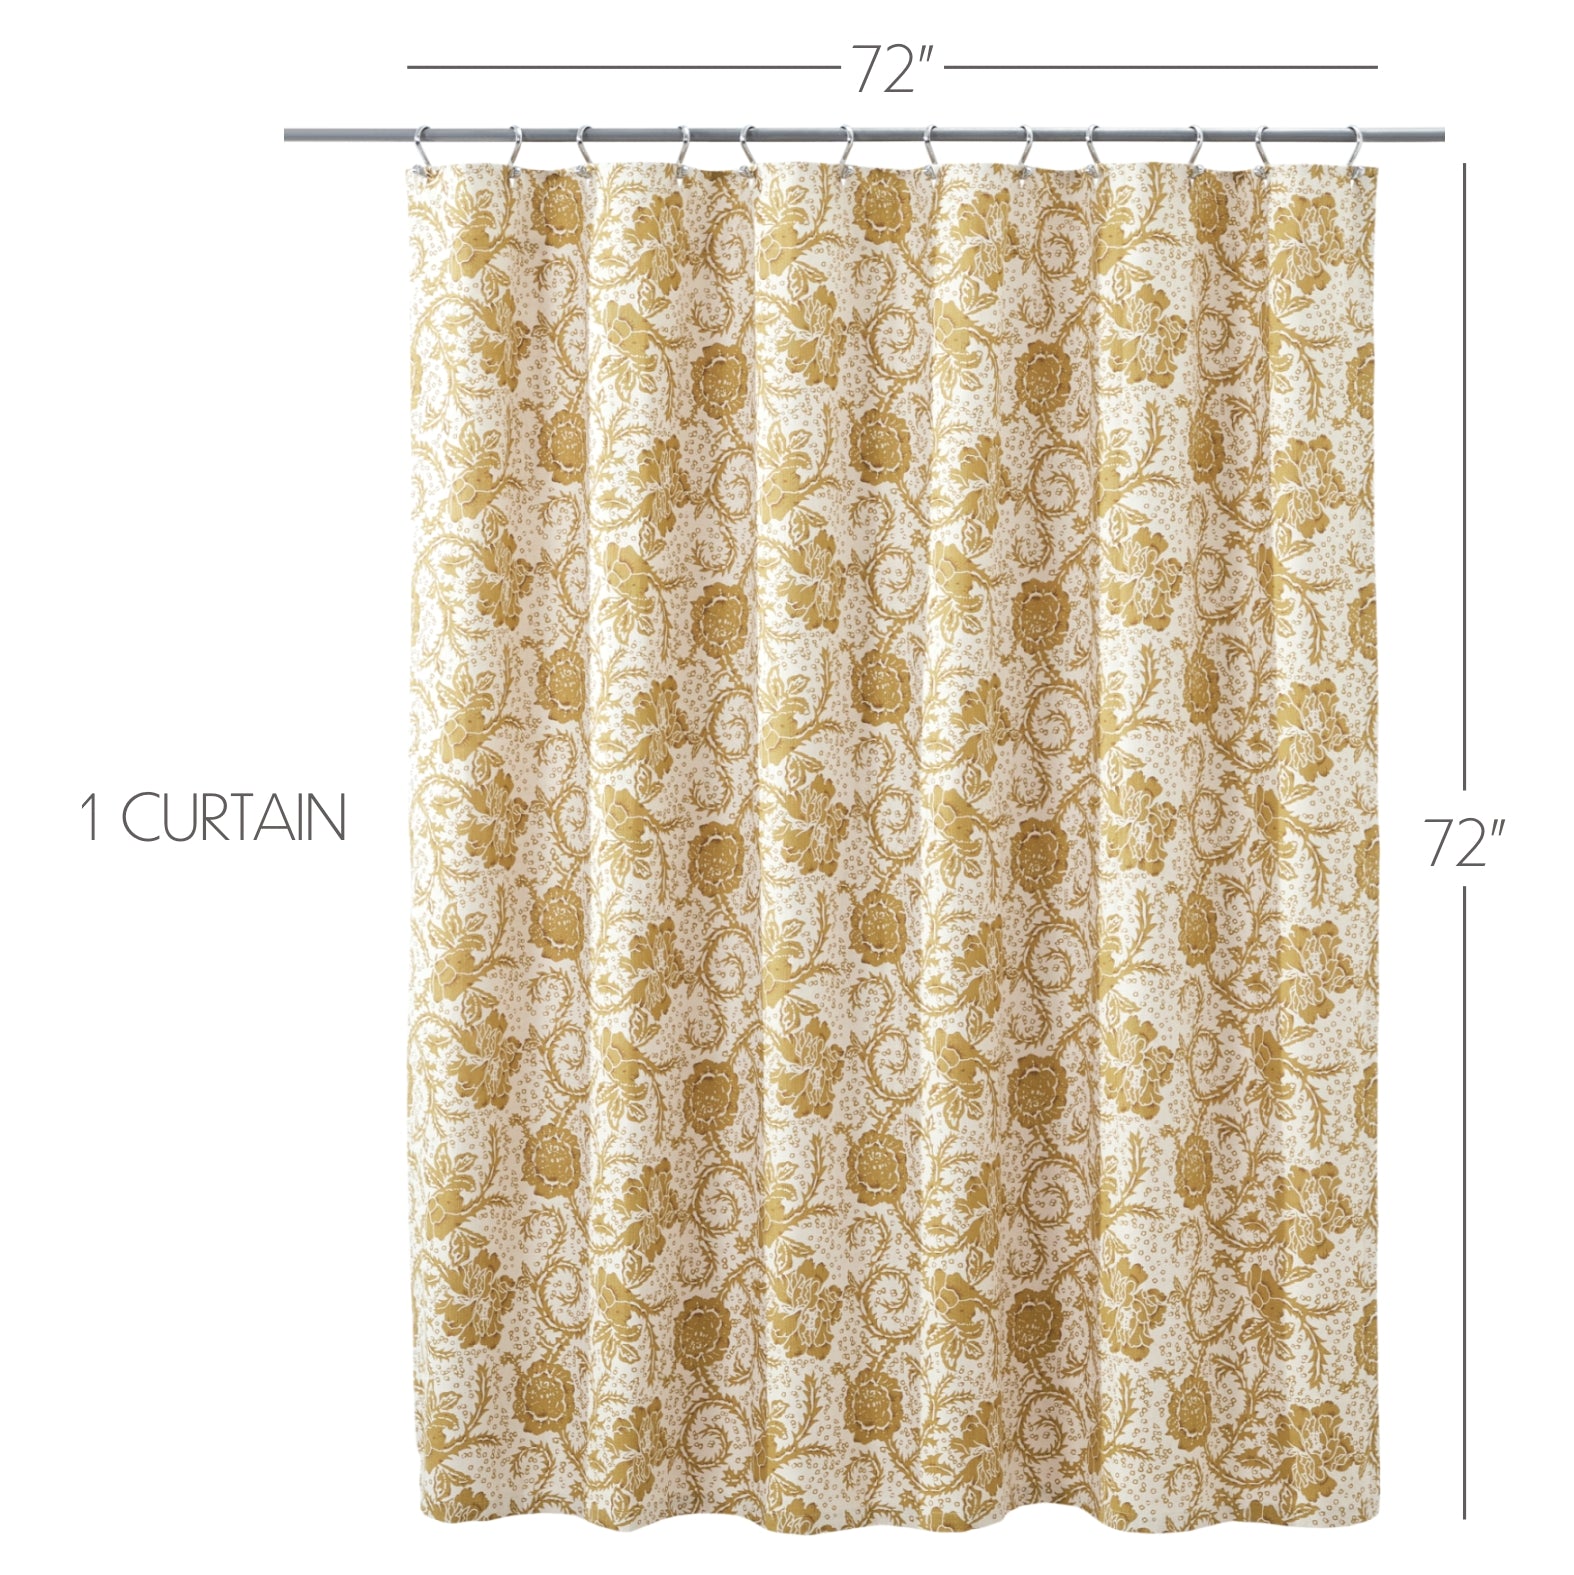 81209-Dorset-Gold-Floral-Shower-Curtain-72x72-image-1